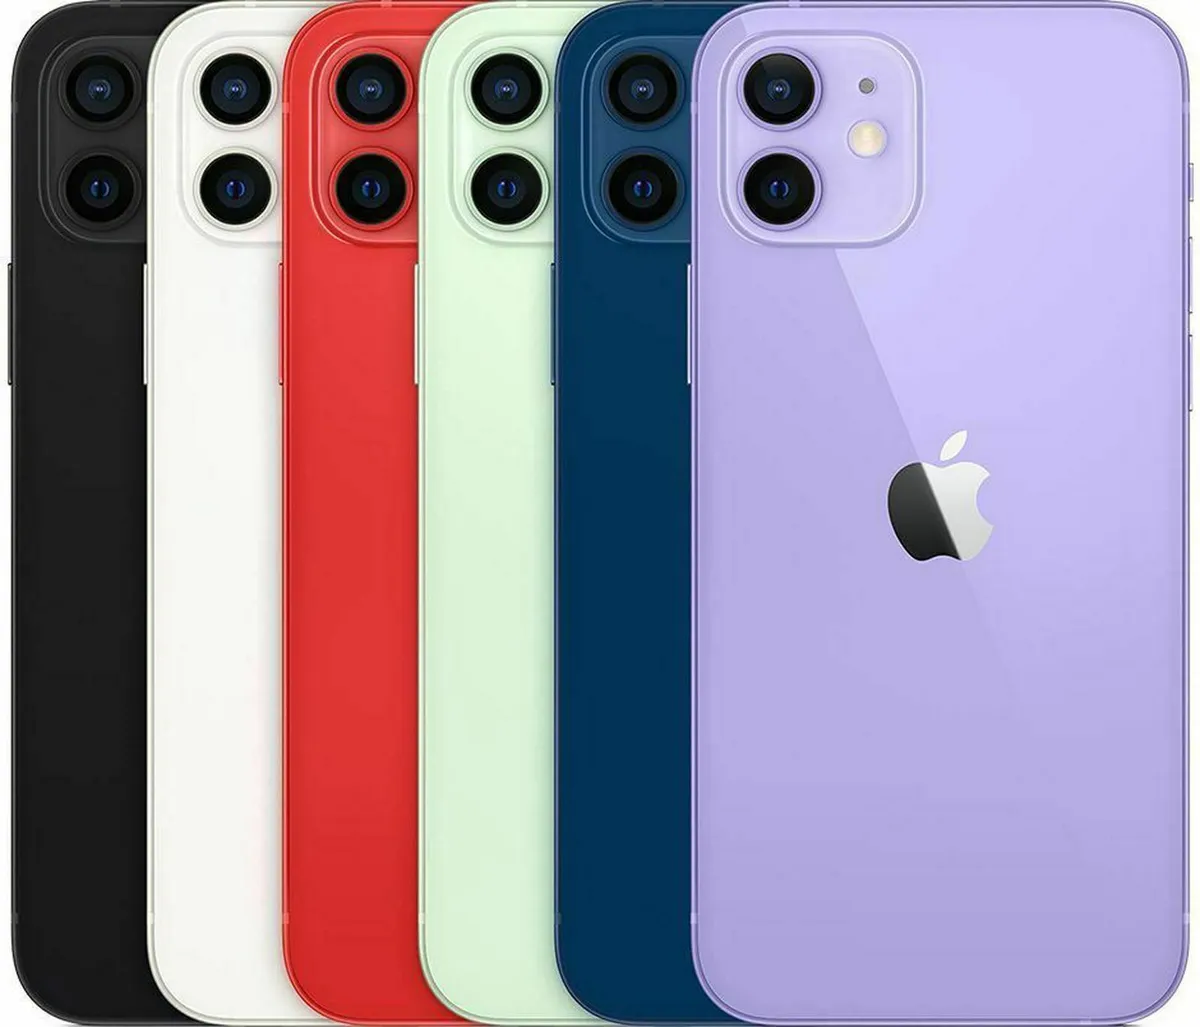 Apple iPhone 12 Mini 64GB 128GB 256GB All Colors (Unlocked) - Very